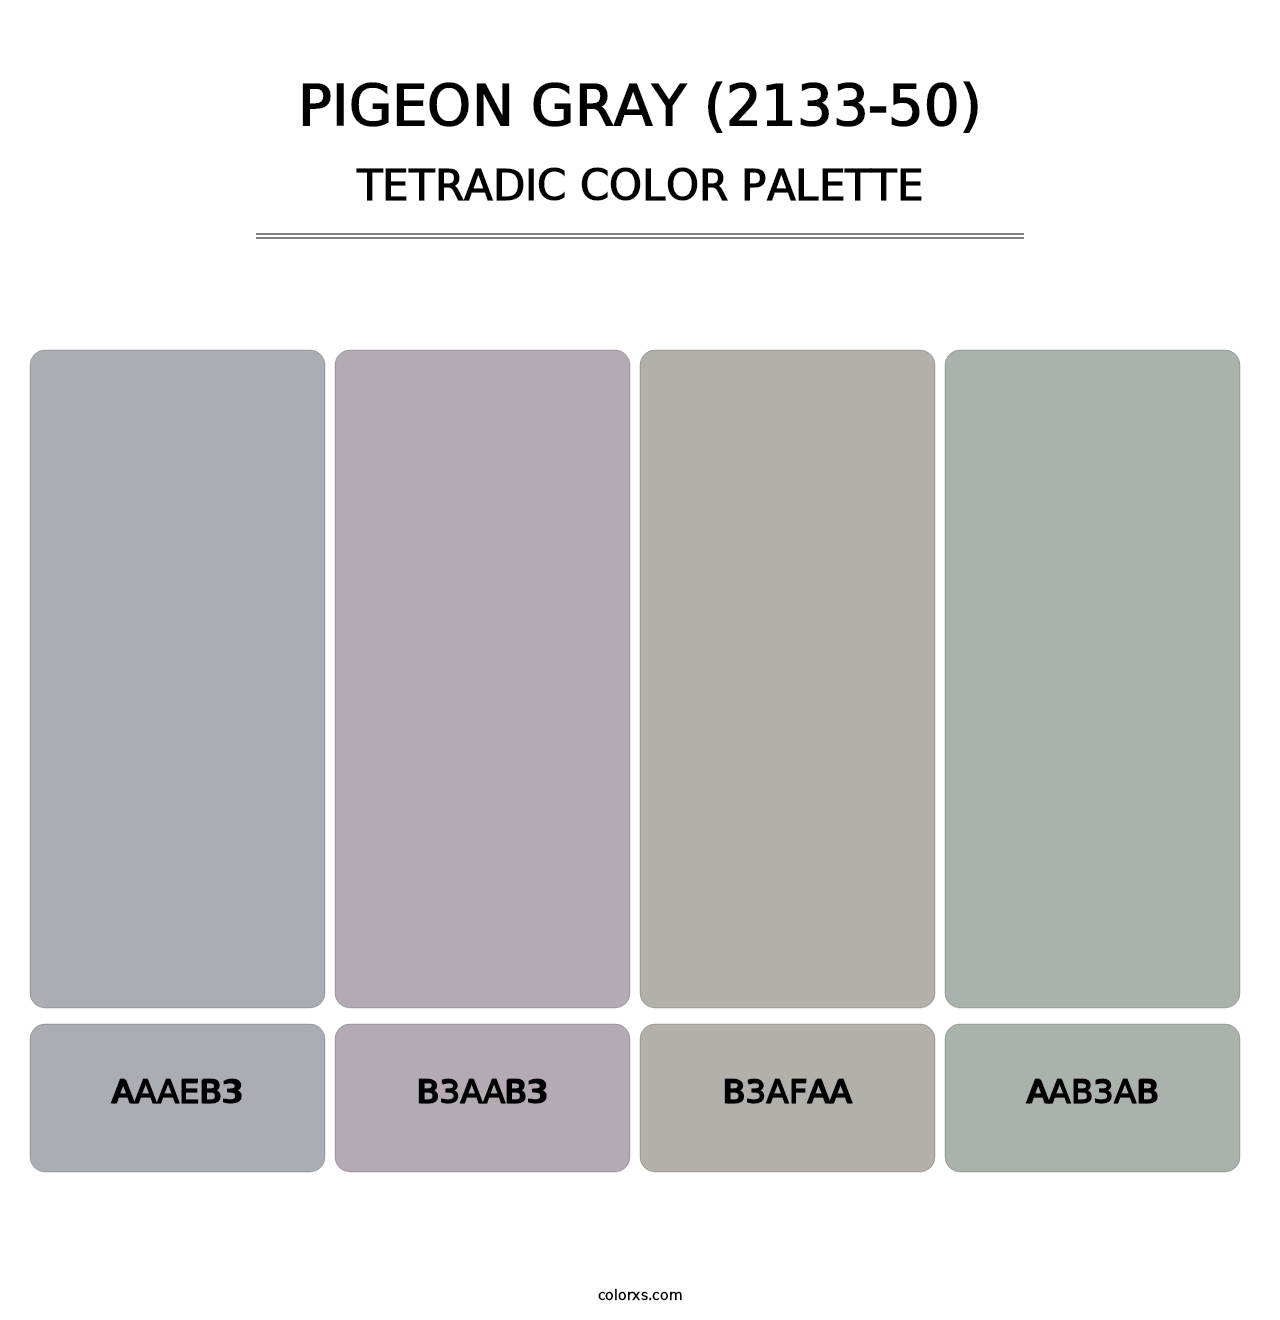 Pigeon Gray (2133-50) - Tetradic Color Palette